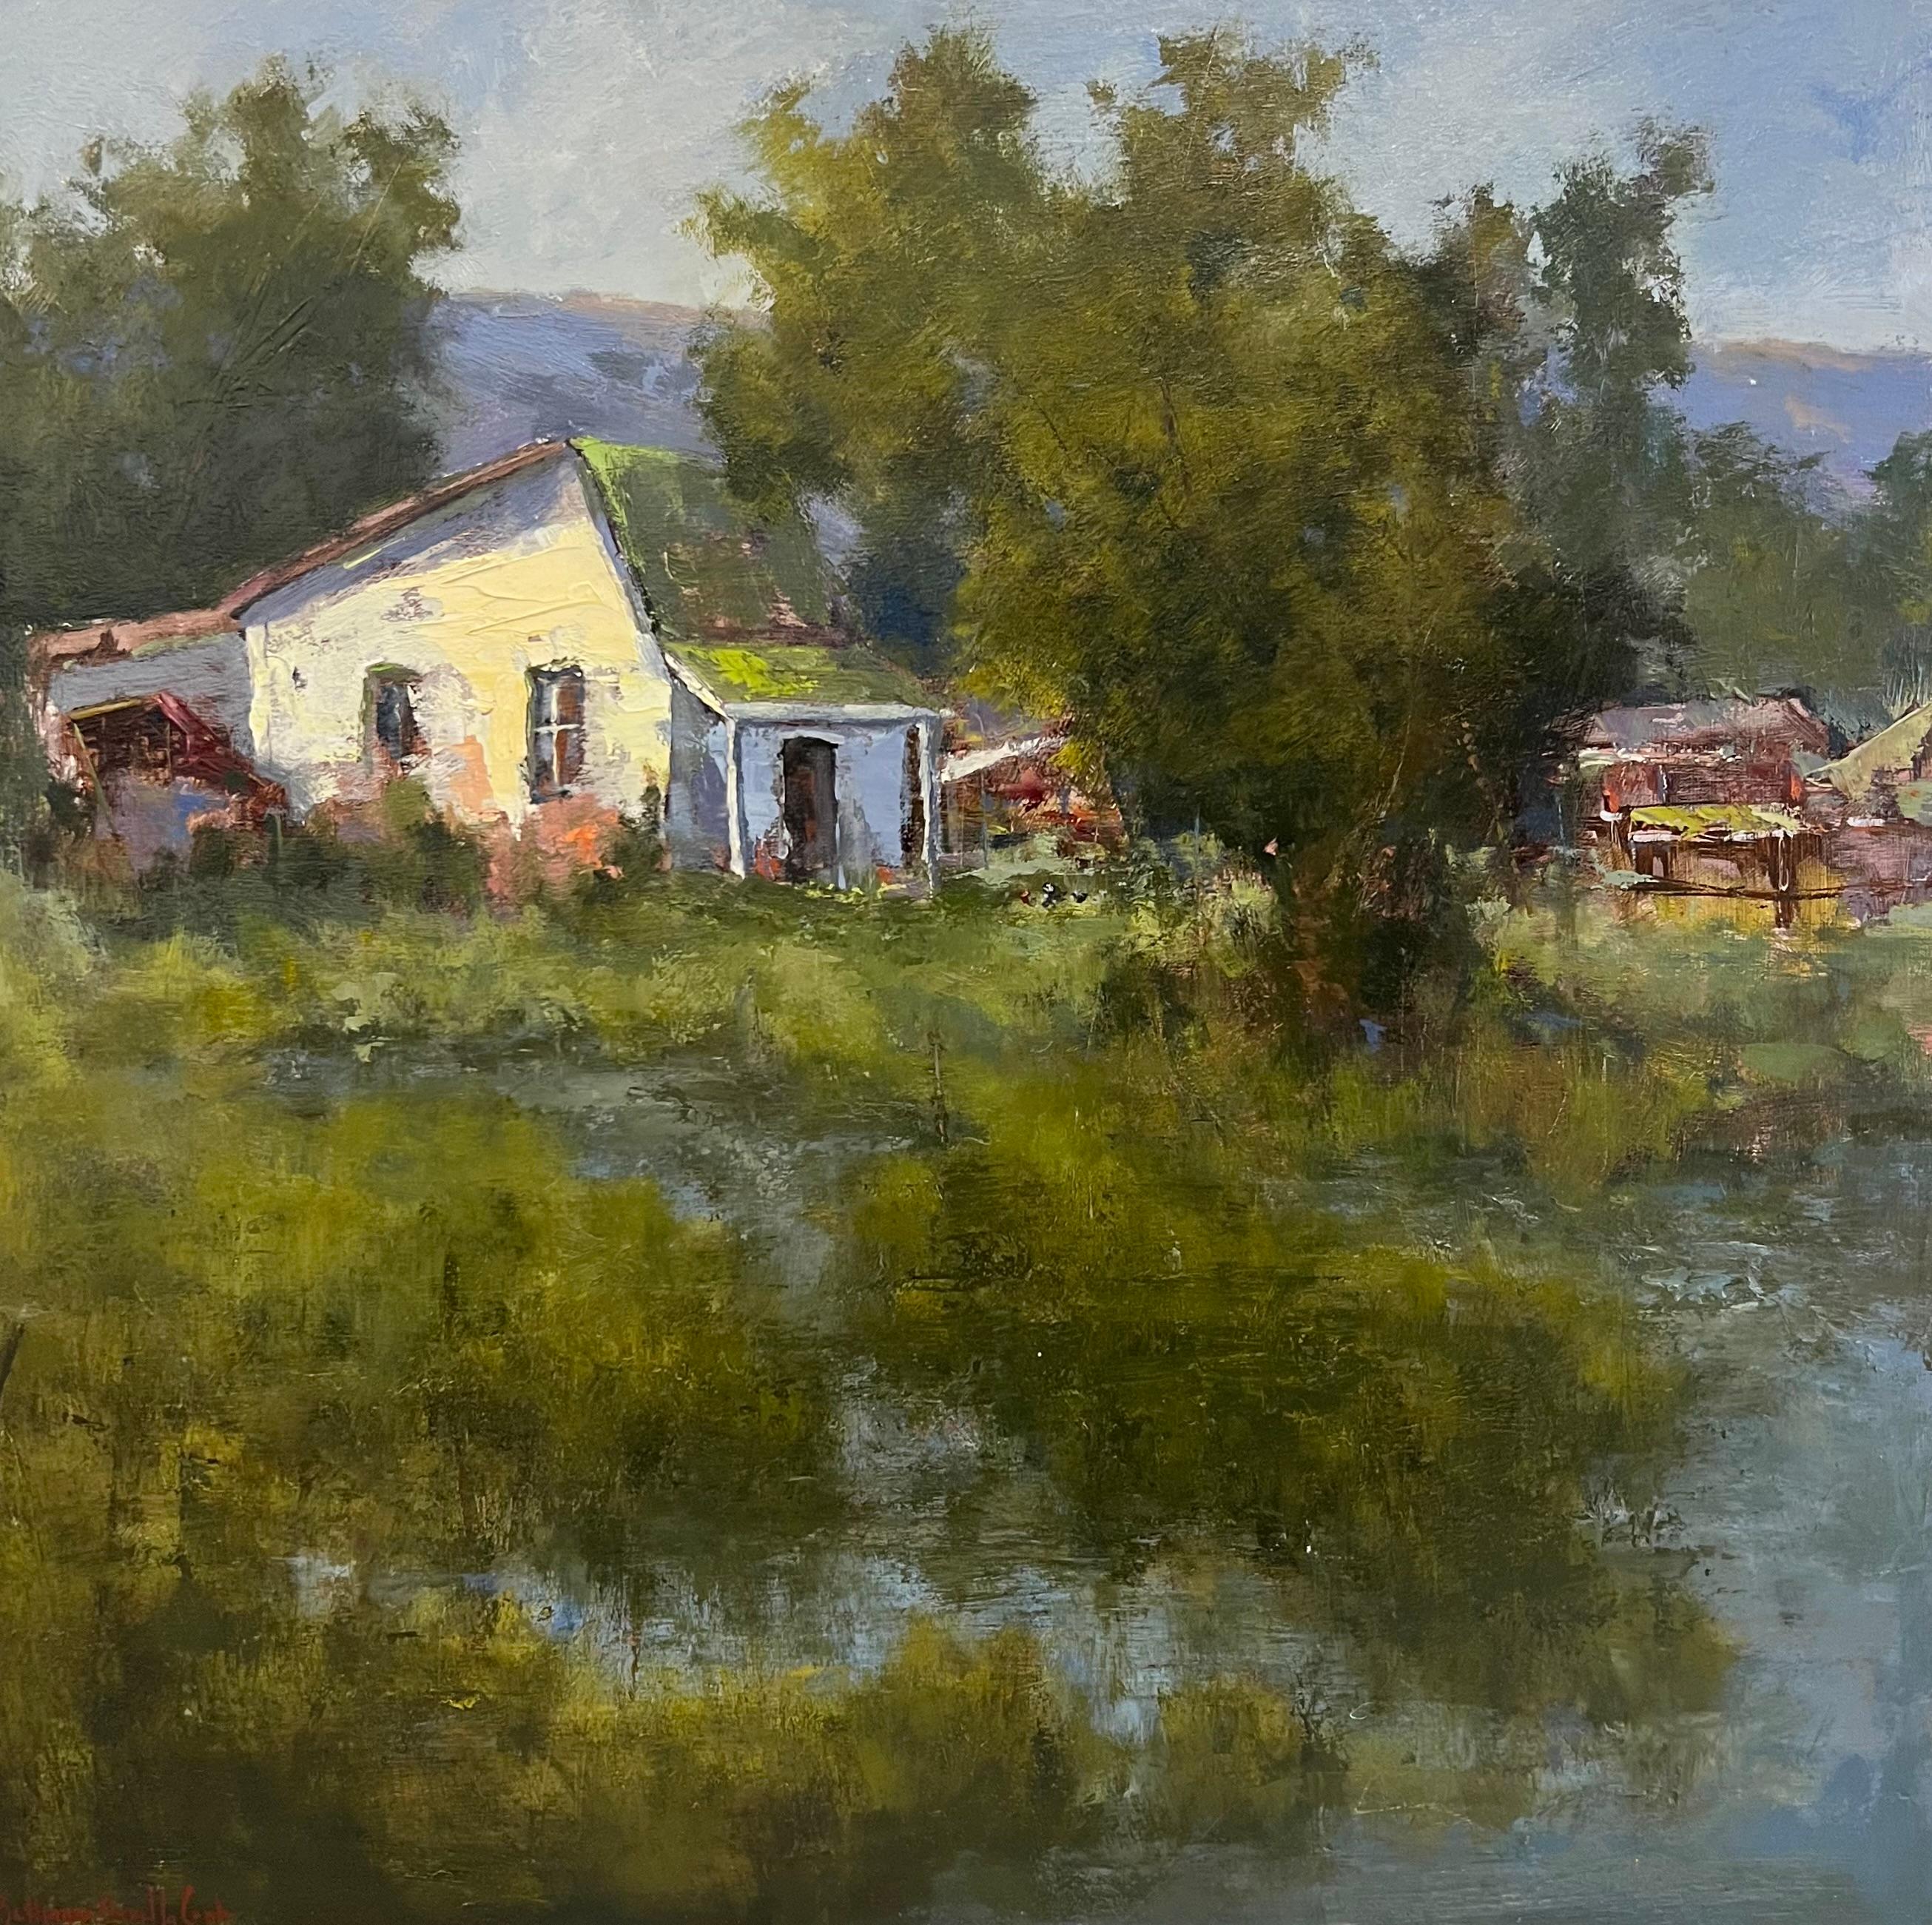 Bethanne Kinsella Cople Landscape Painting - Farm Lane by Bethanne Cople, Oil on birch panel painting landscape